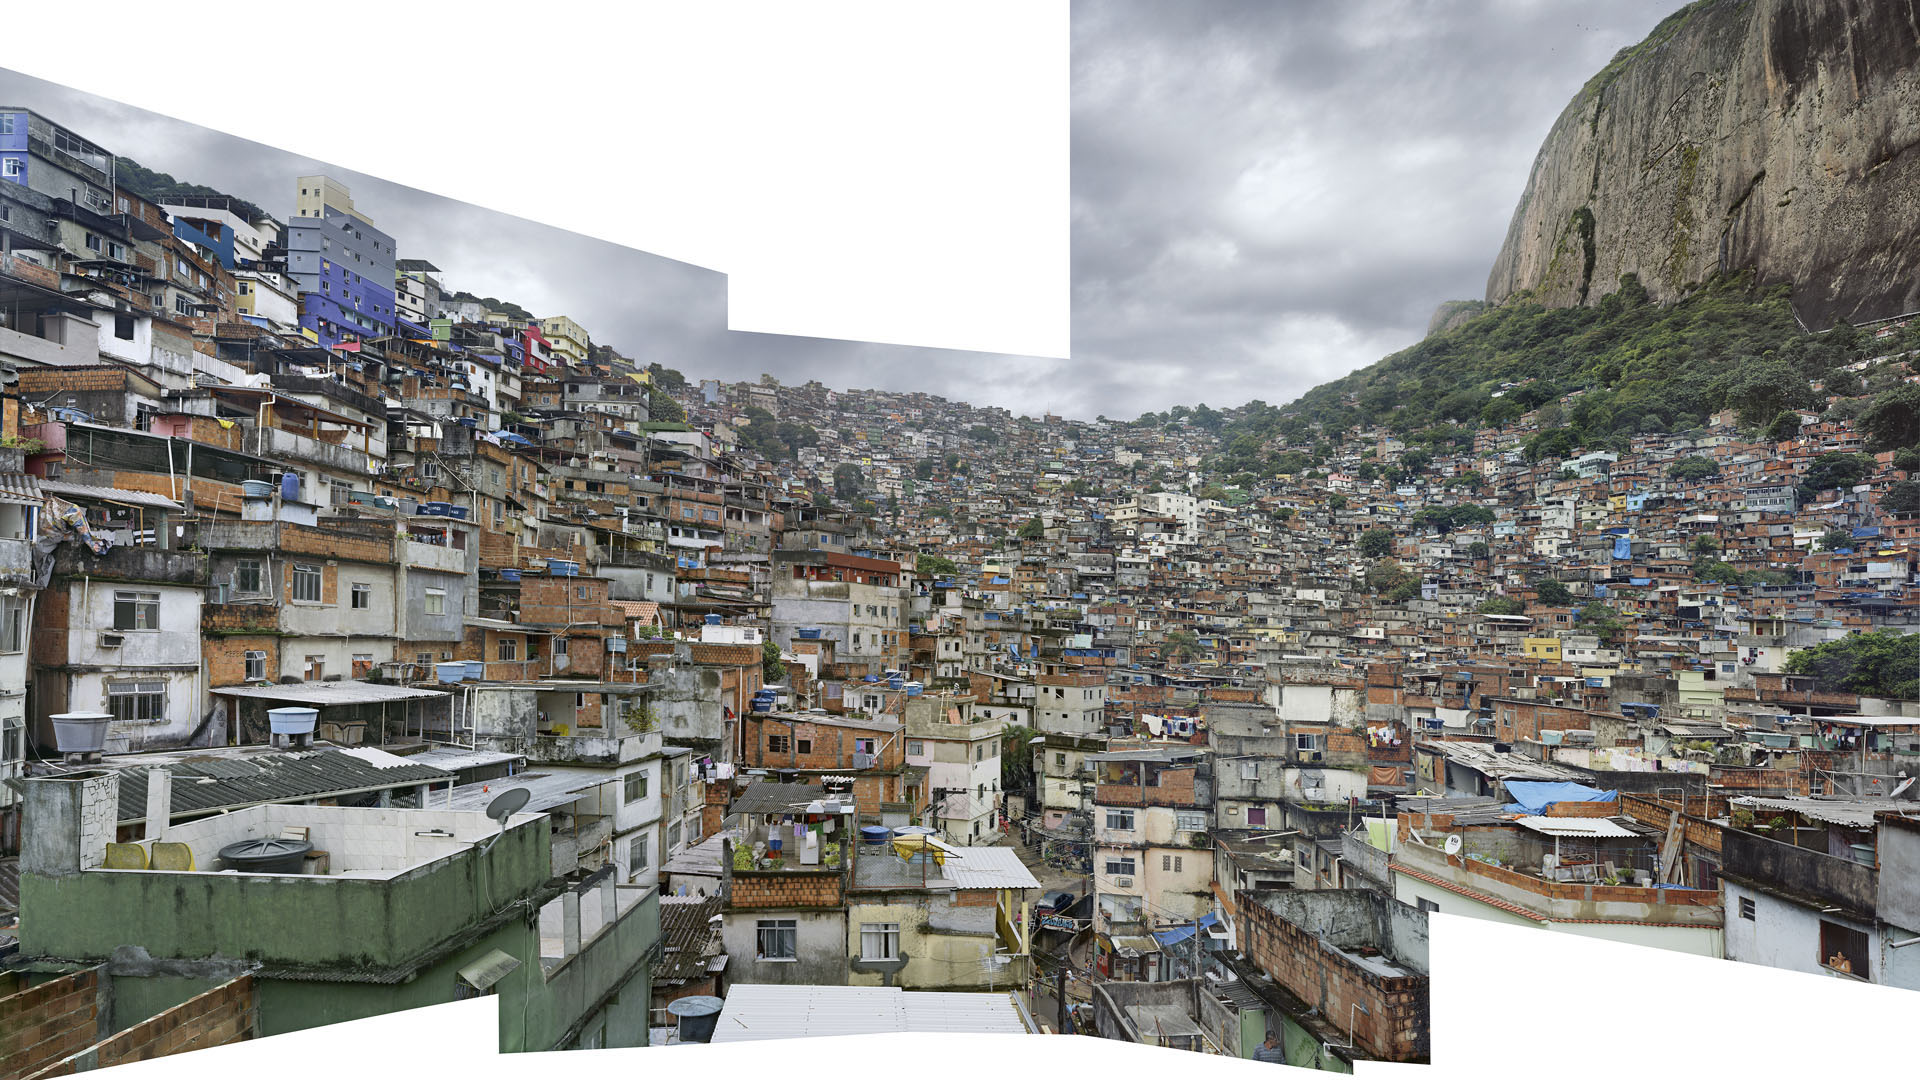 Panorama da Rocinha, 2014. Rio de Janeiro, RJ - Brasil. Foto de Robert Polidori / Acervo IMS